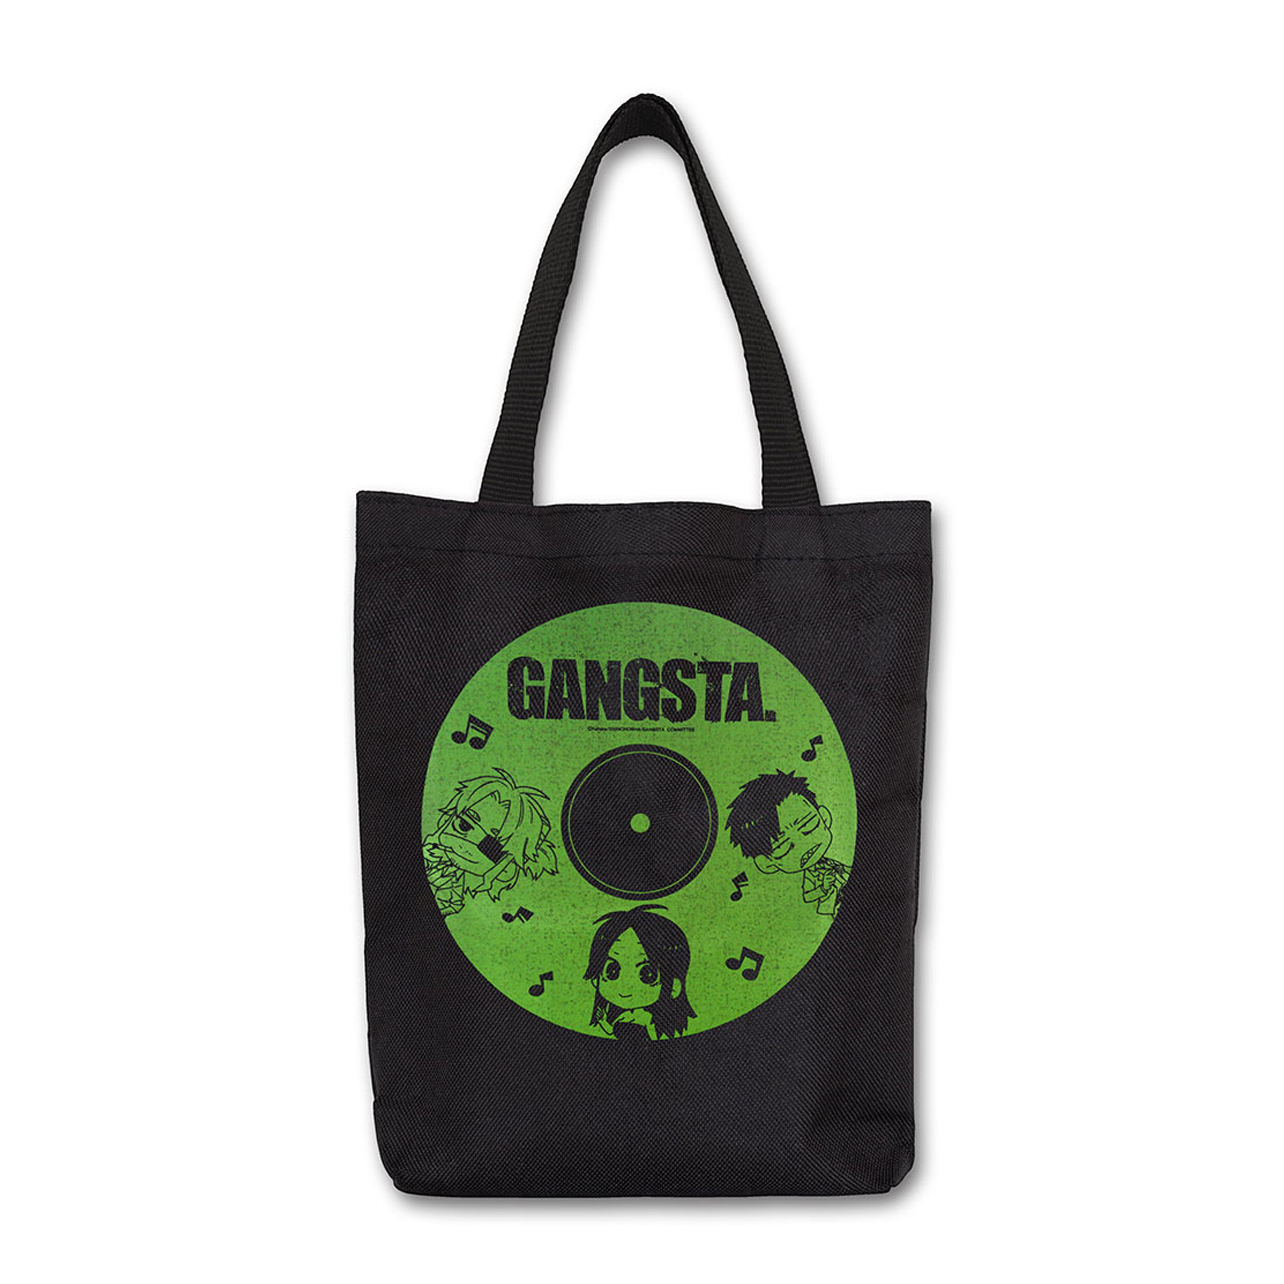 Gangsta - Tote Bag image count 0